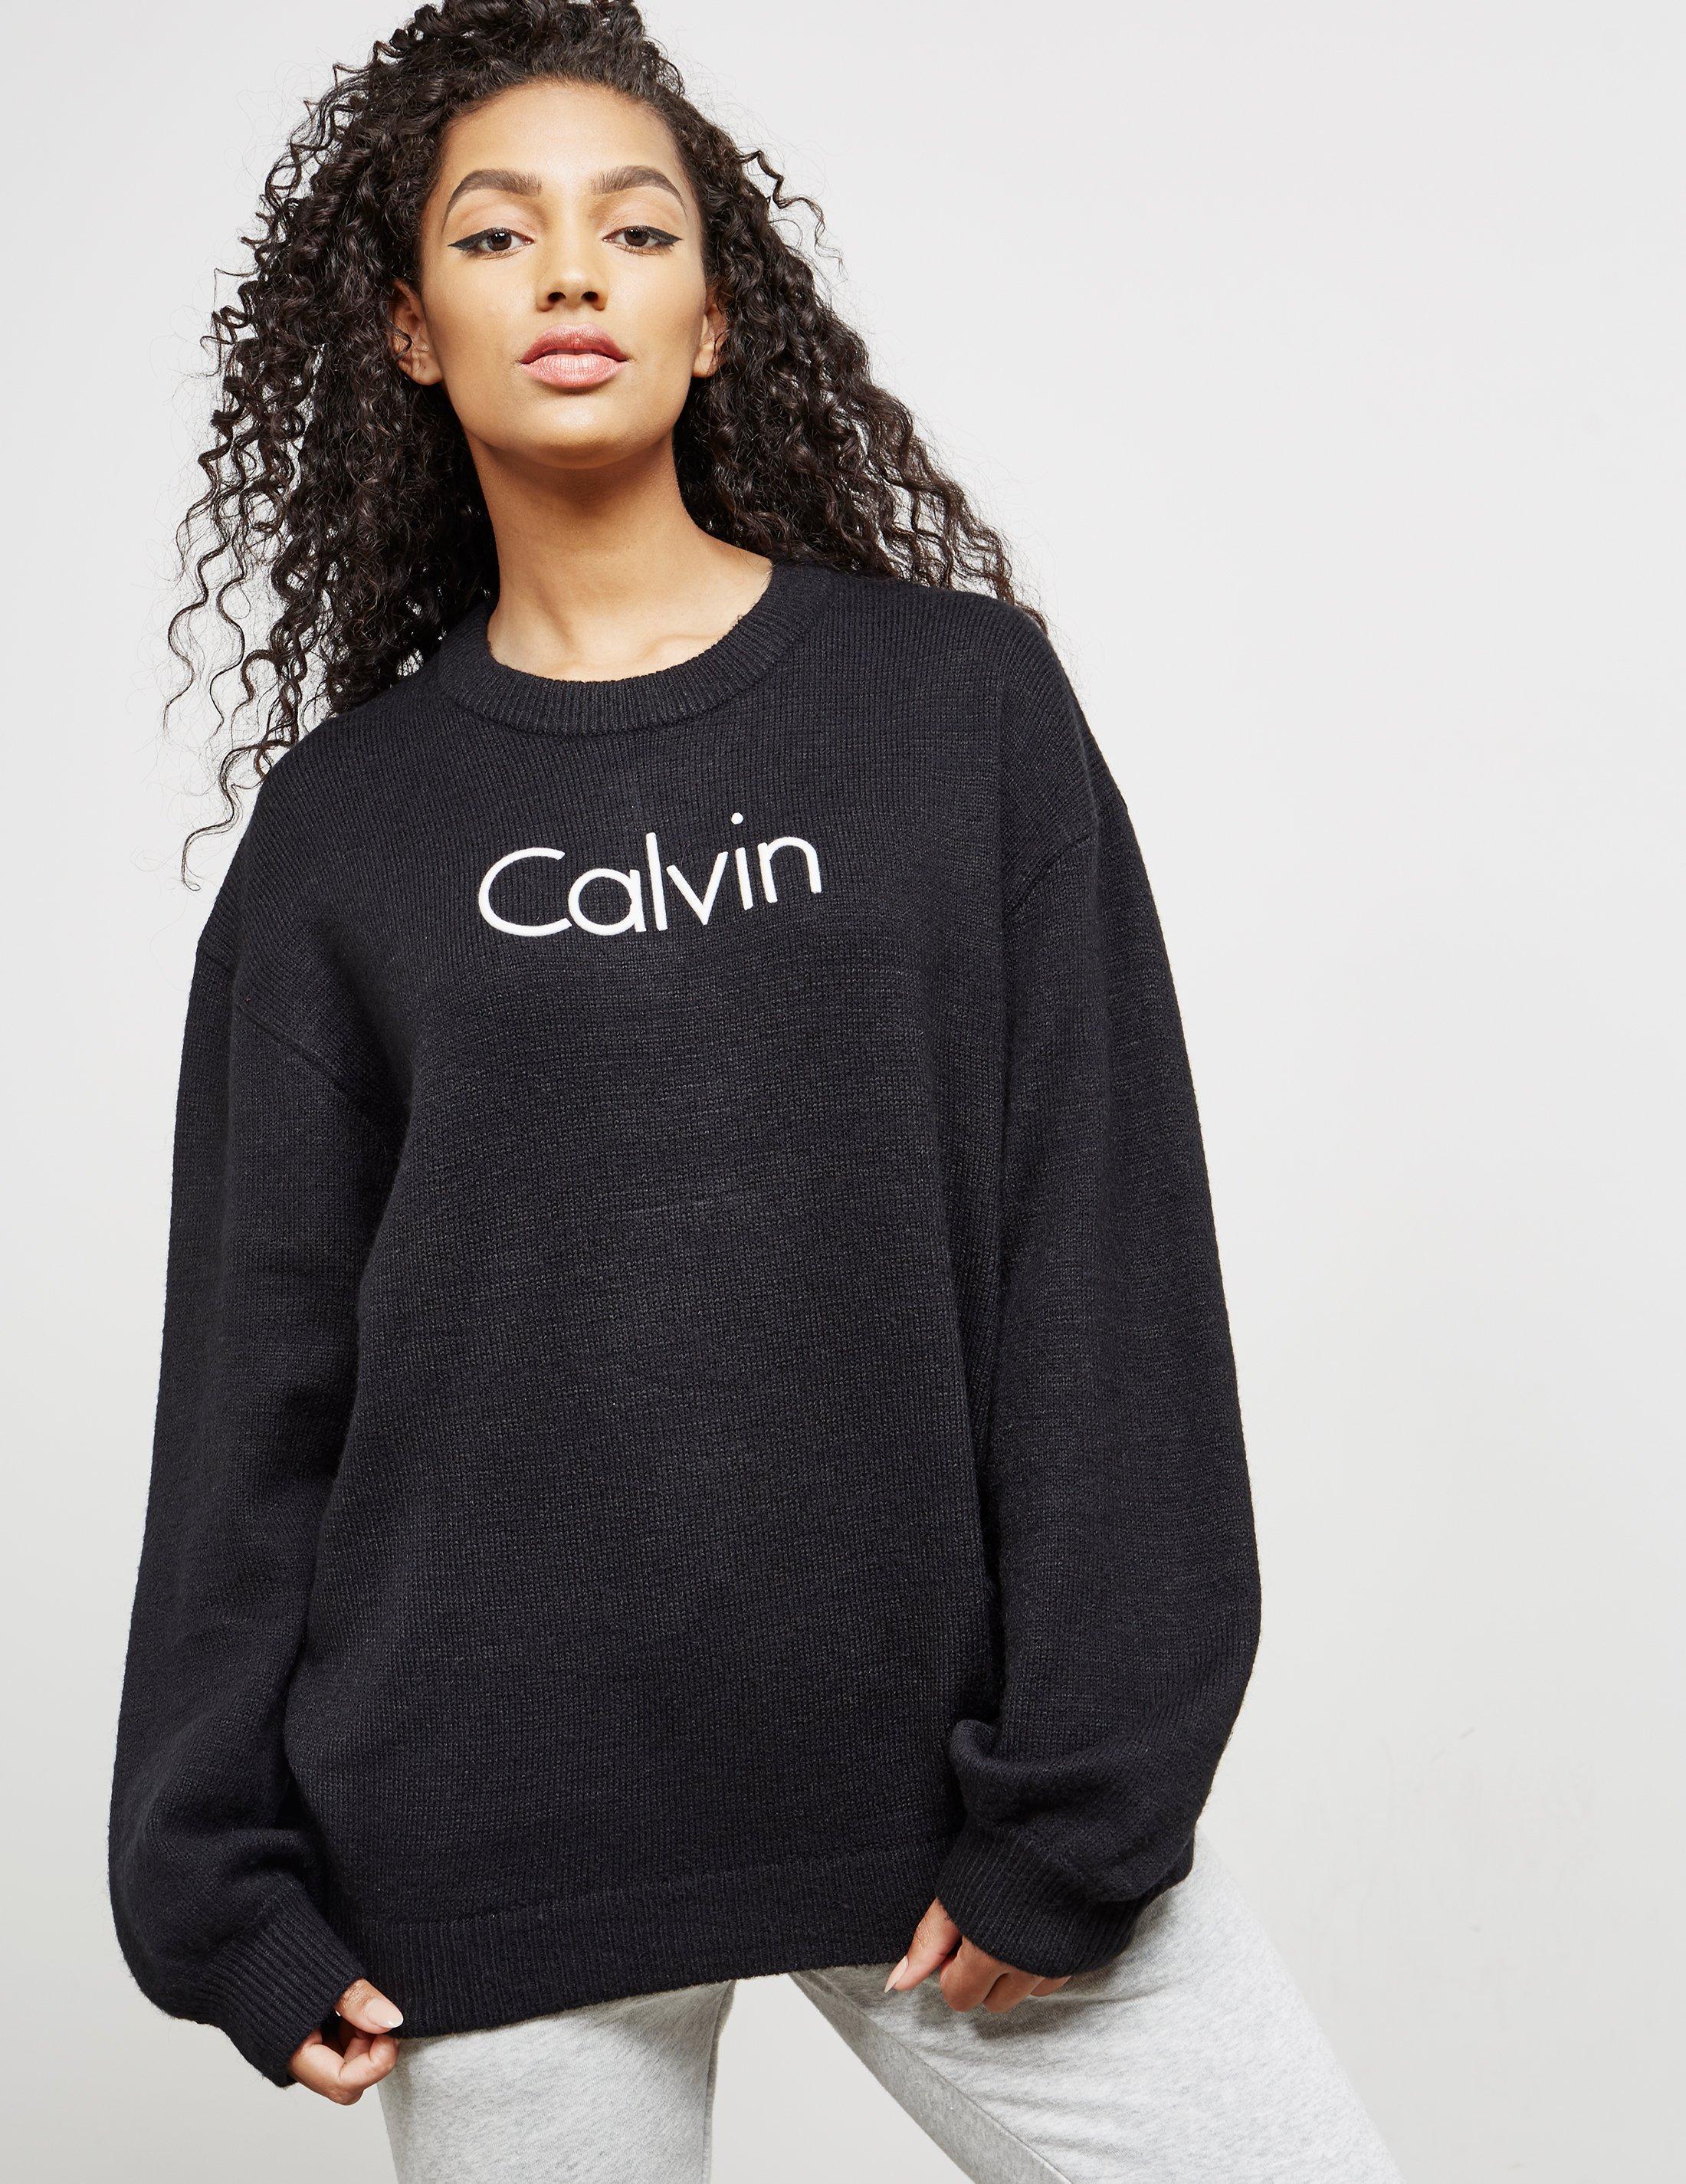 Calvin Klein Jumper Black on Sale, 53% OFF | empow-her.com